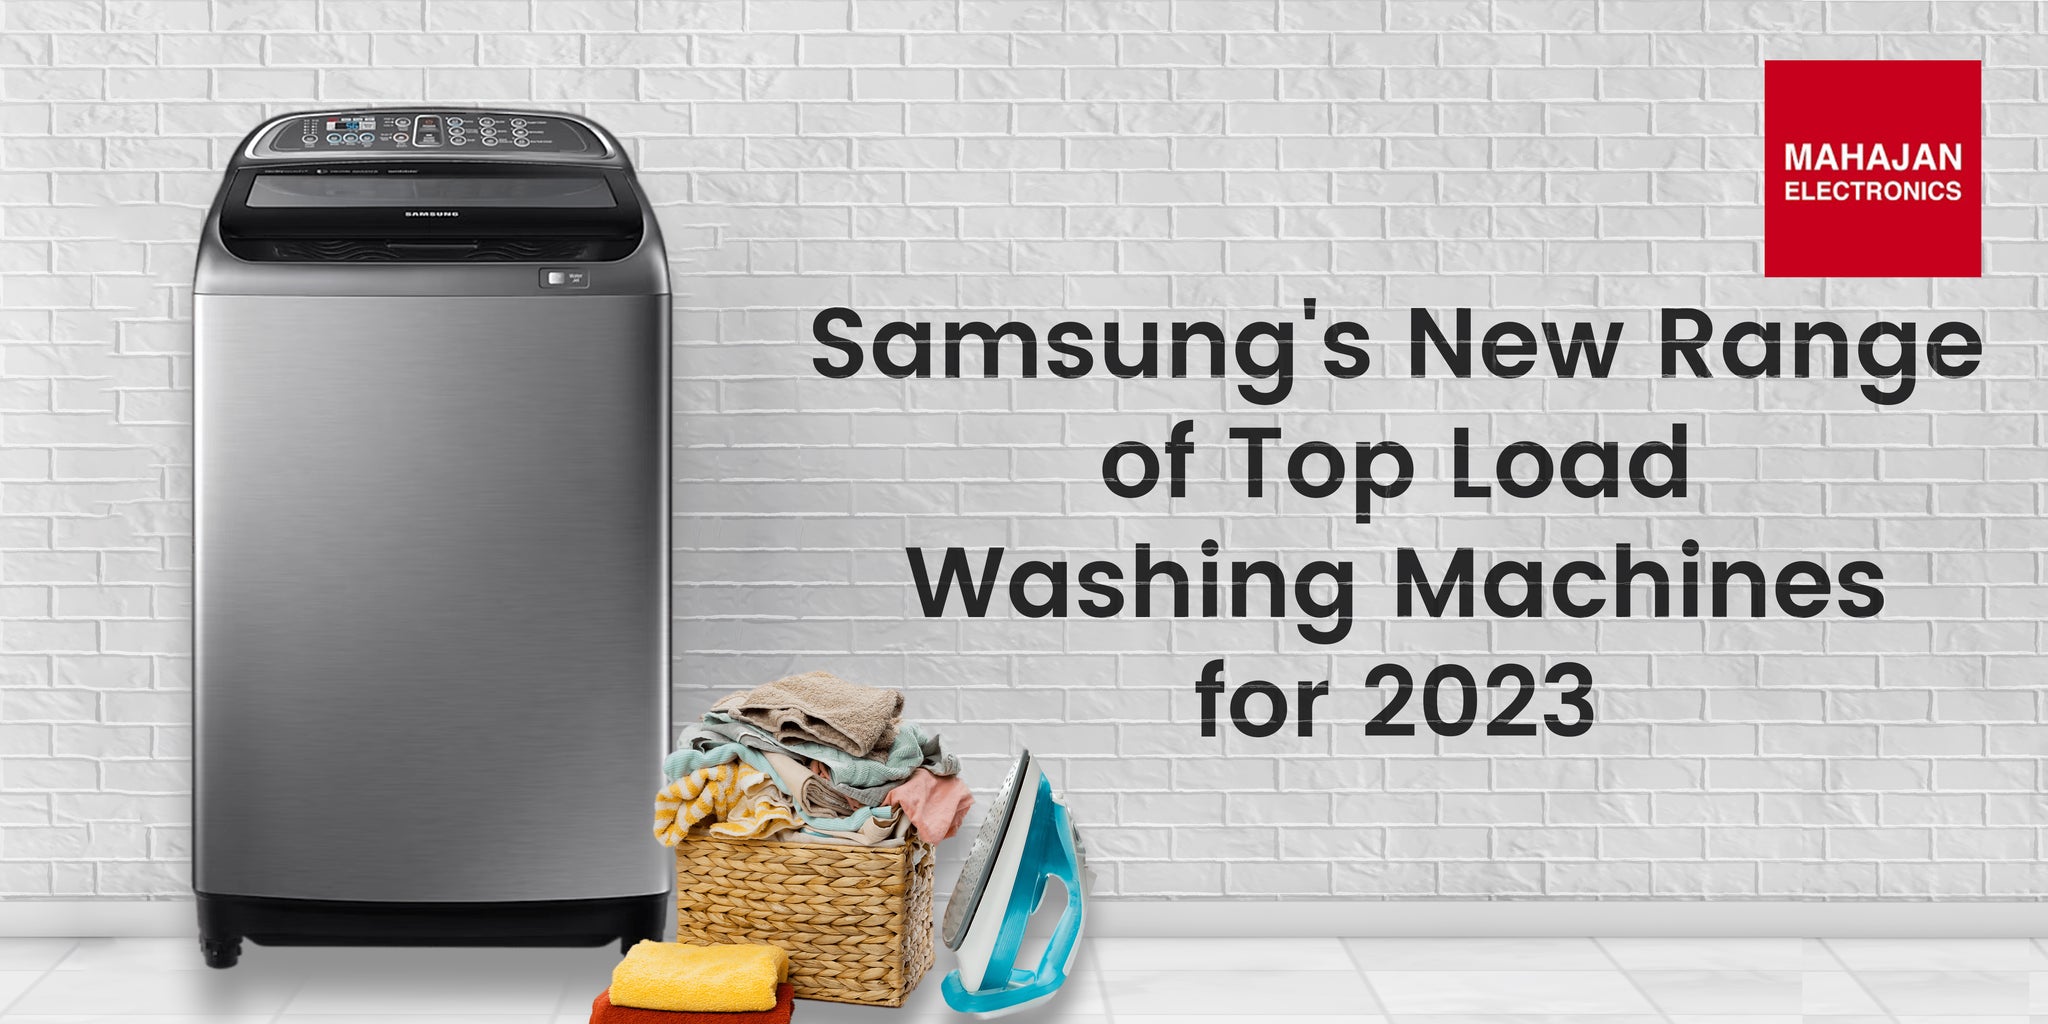 Samsung's New Range of Top Load Washing Machines